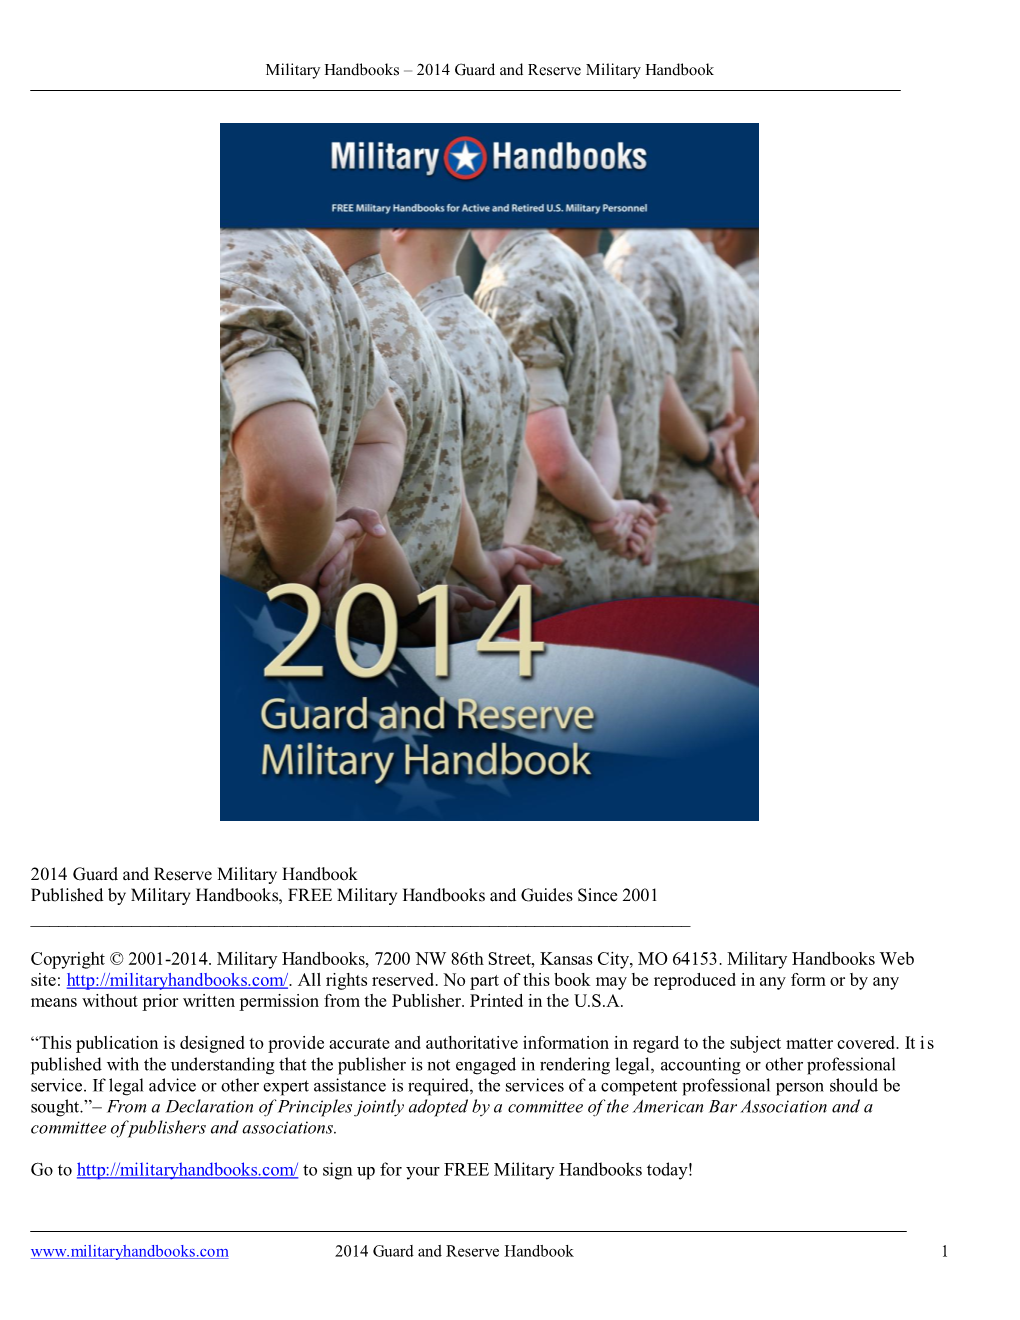 2014 Guard & Reserve Military Handbook